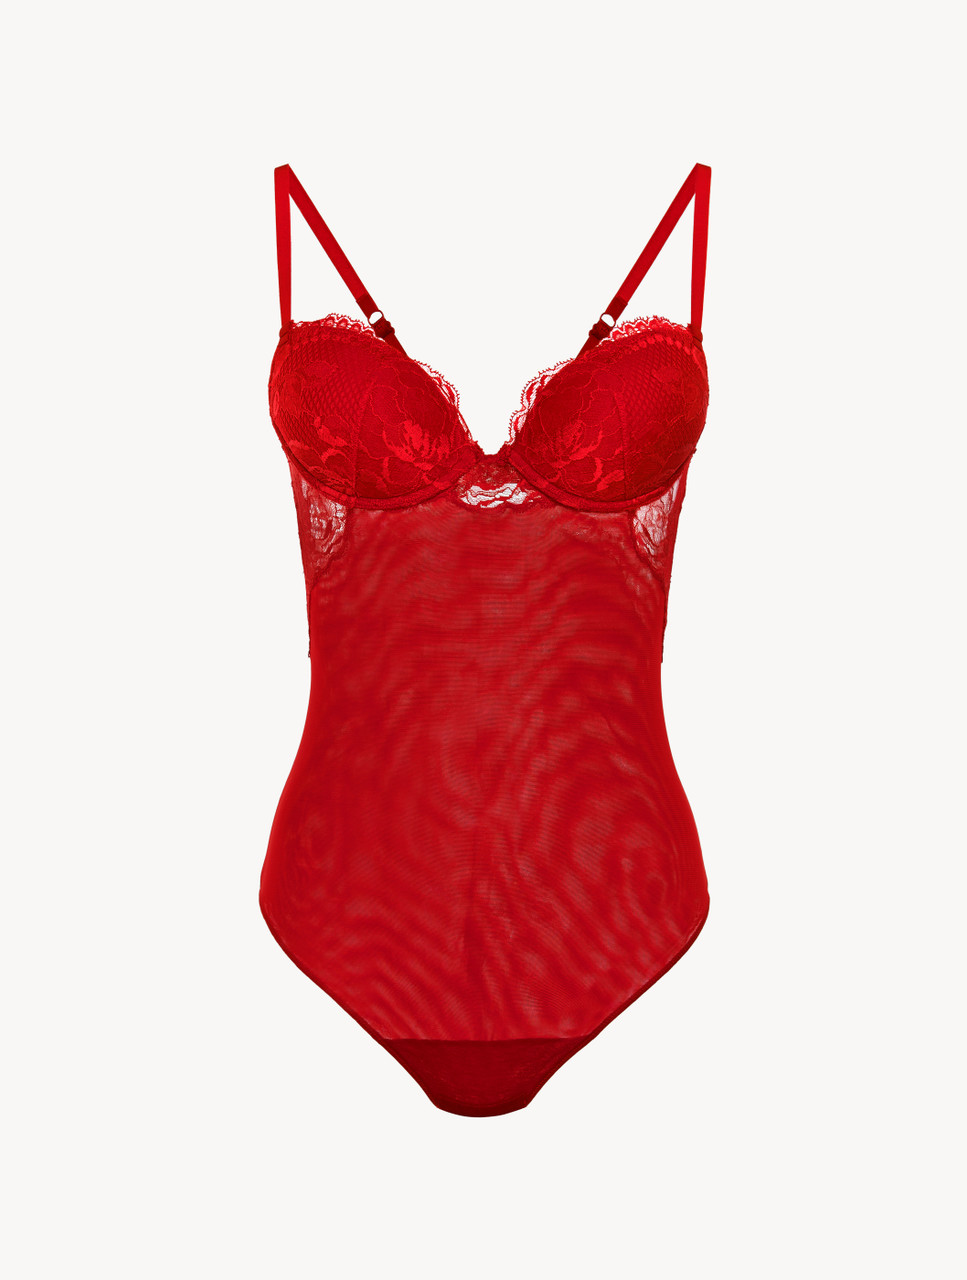 Red lace bodysuit - La Perla - Global